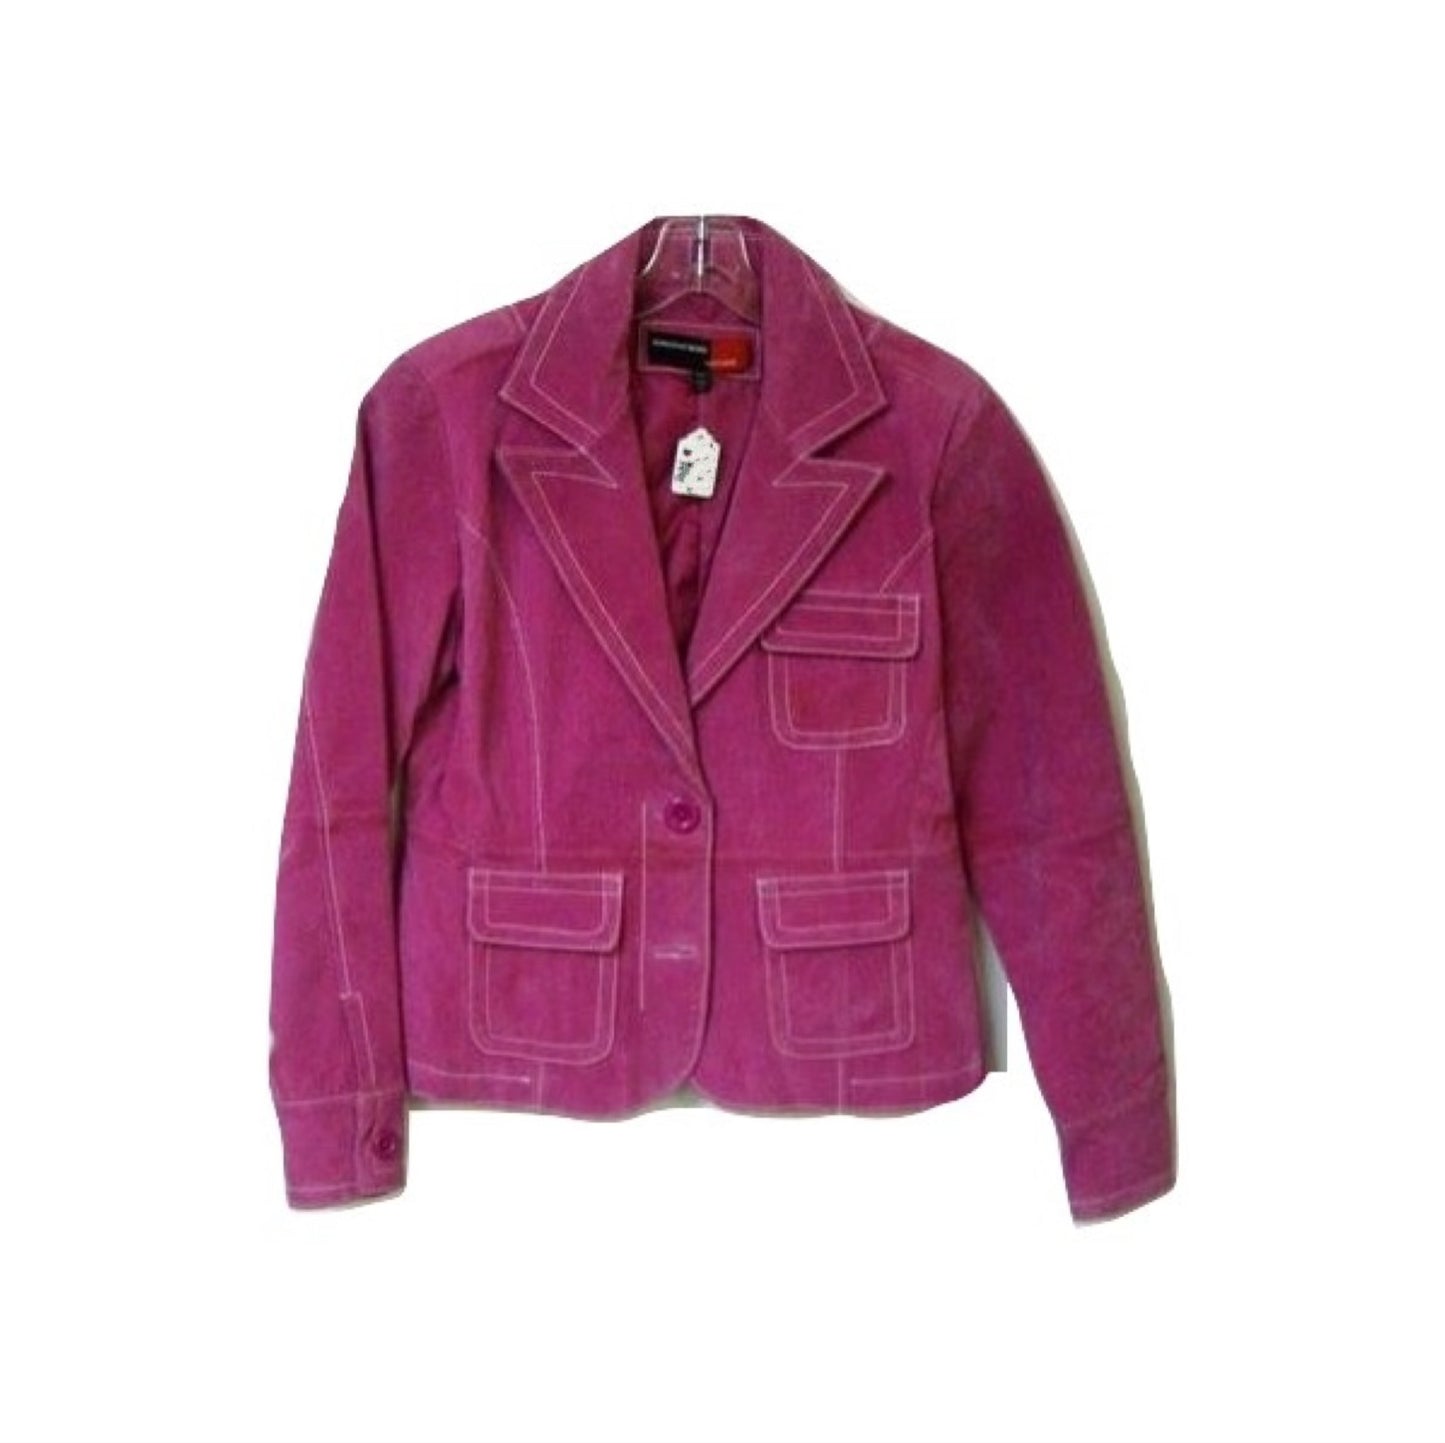 Hot Pink Leather Blazer Jacket White Stitching Wide Collar Sz Small